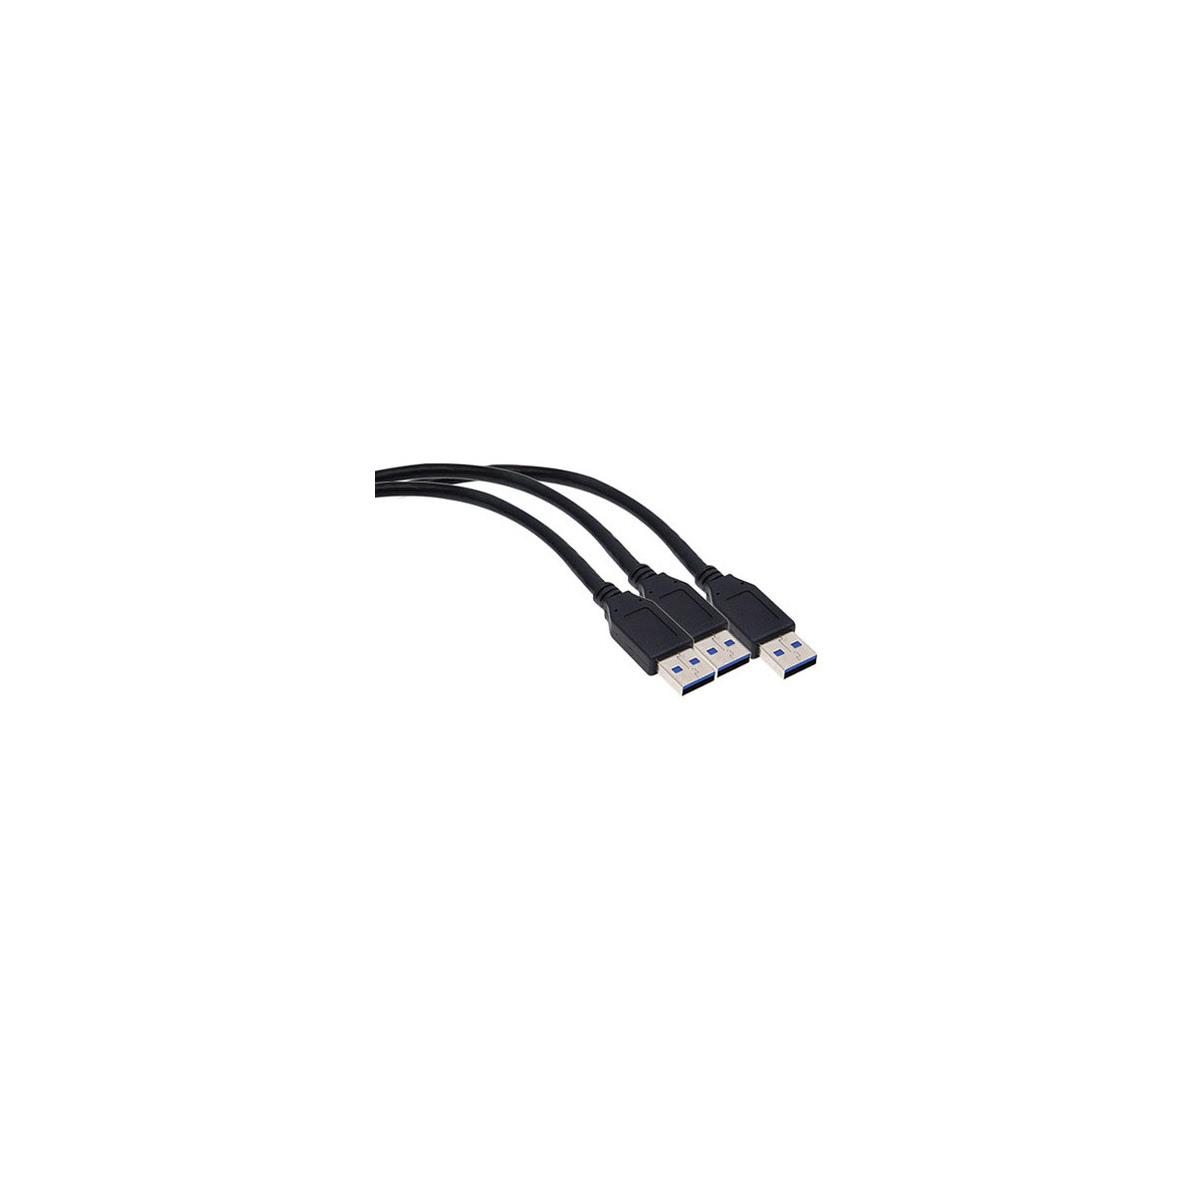 Набор для замены кабеля USB 3.0 для мини-сервера Sonnet xMac #XMCBL-3USB3